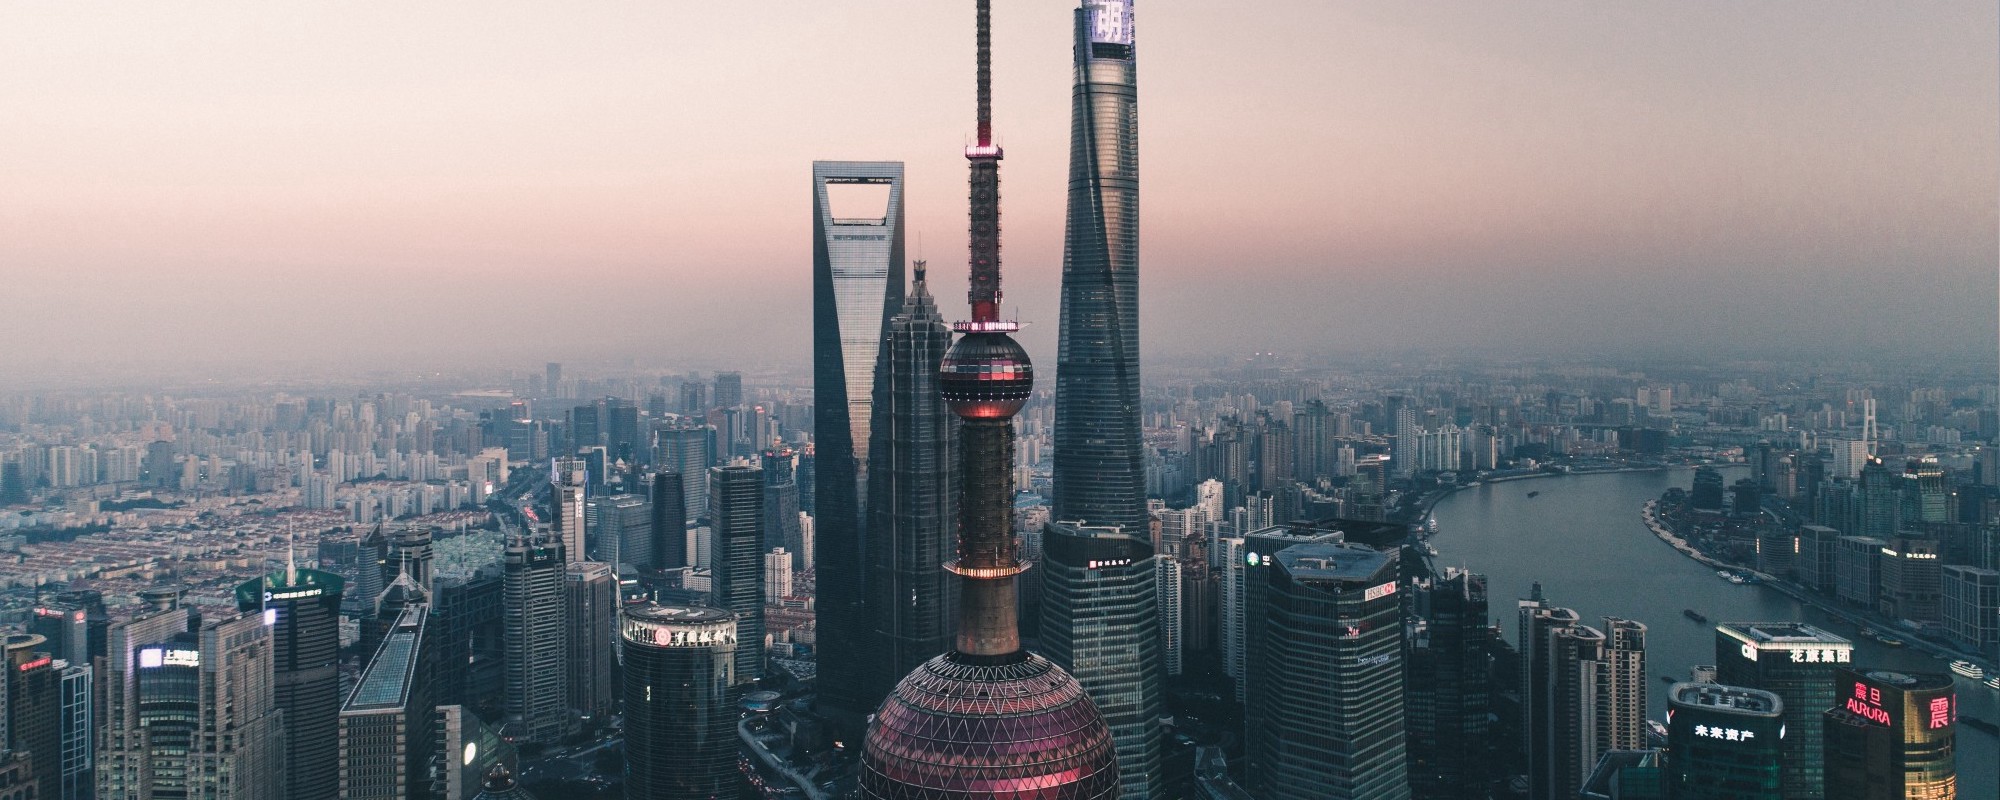 The skyline of Shanghai, China.